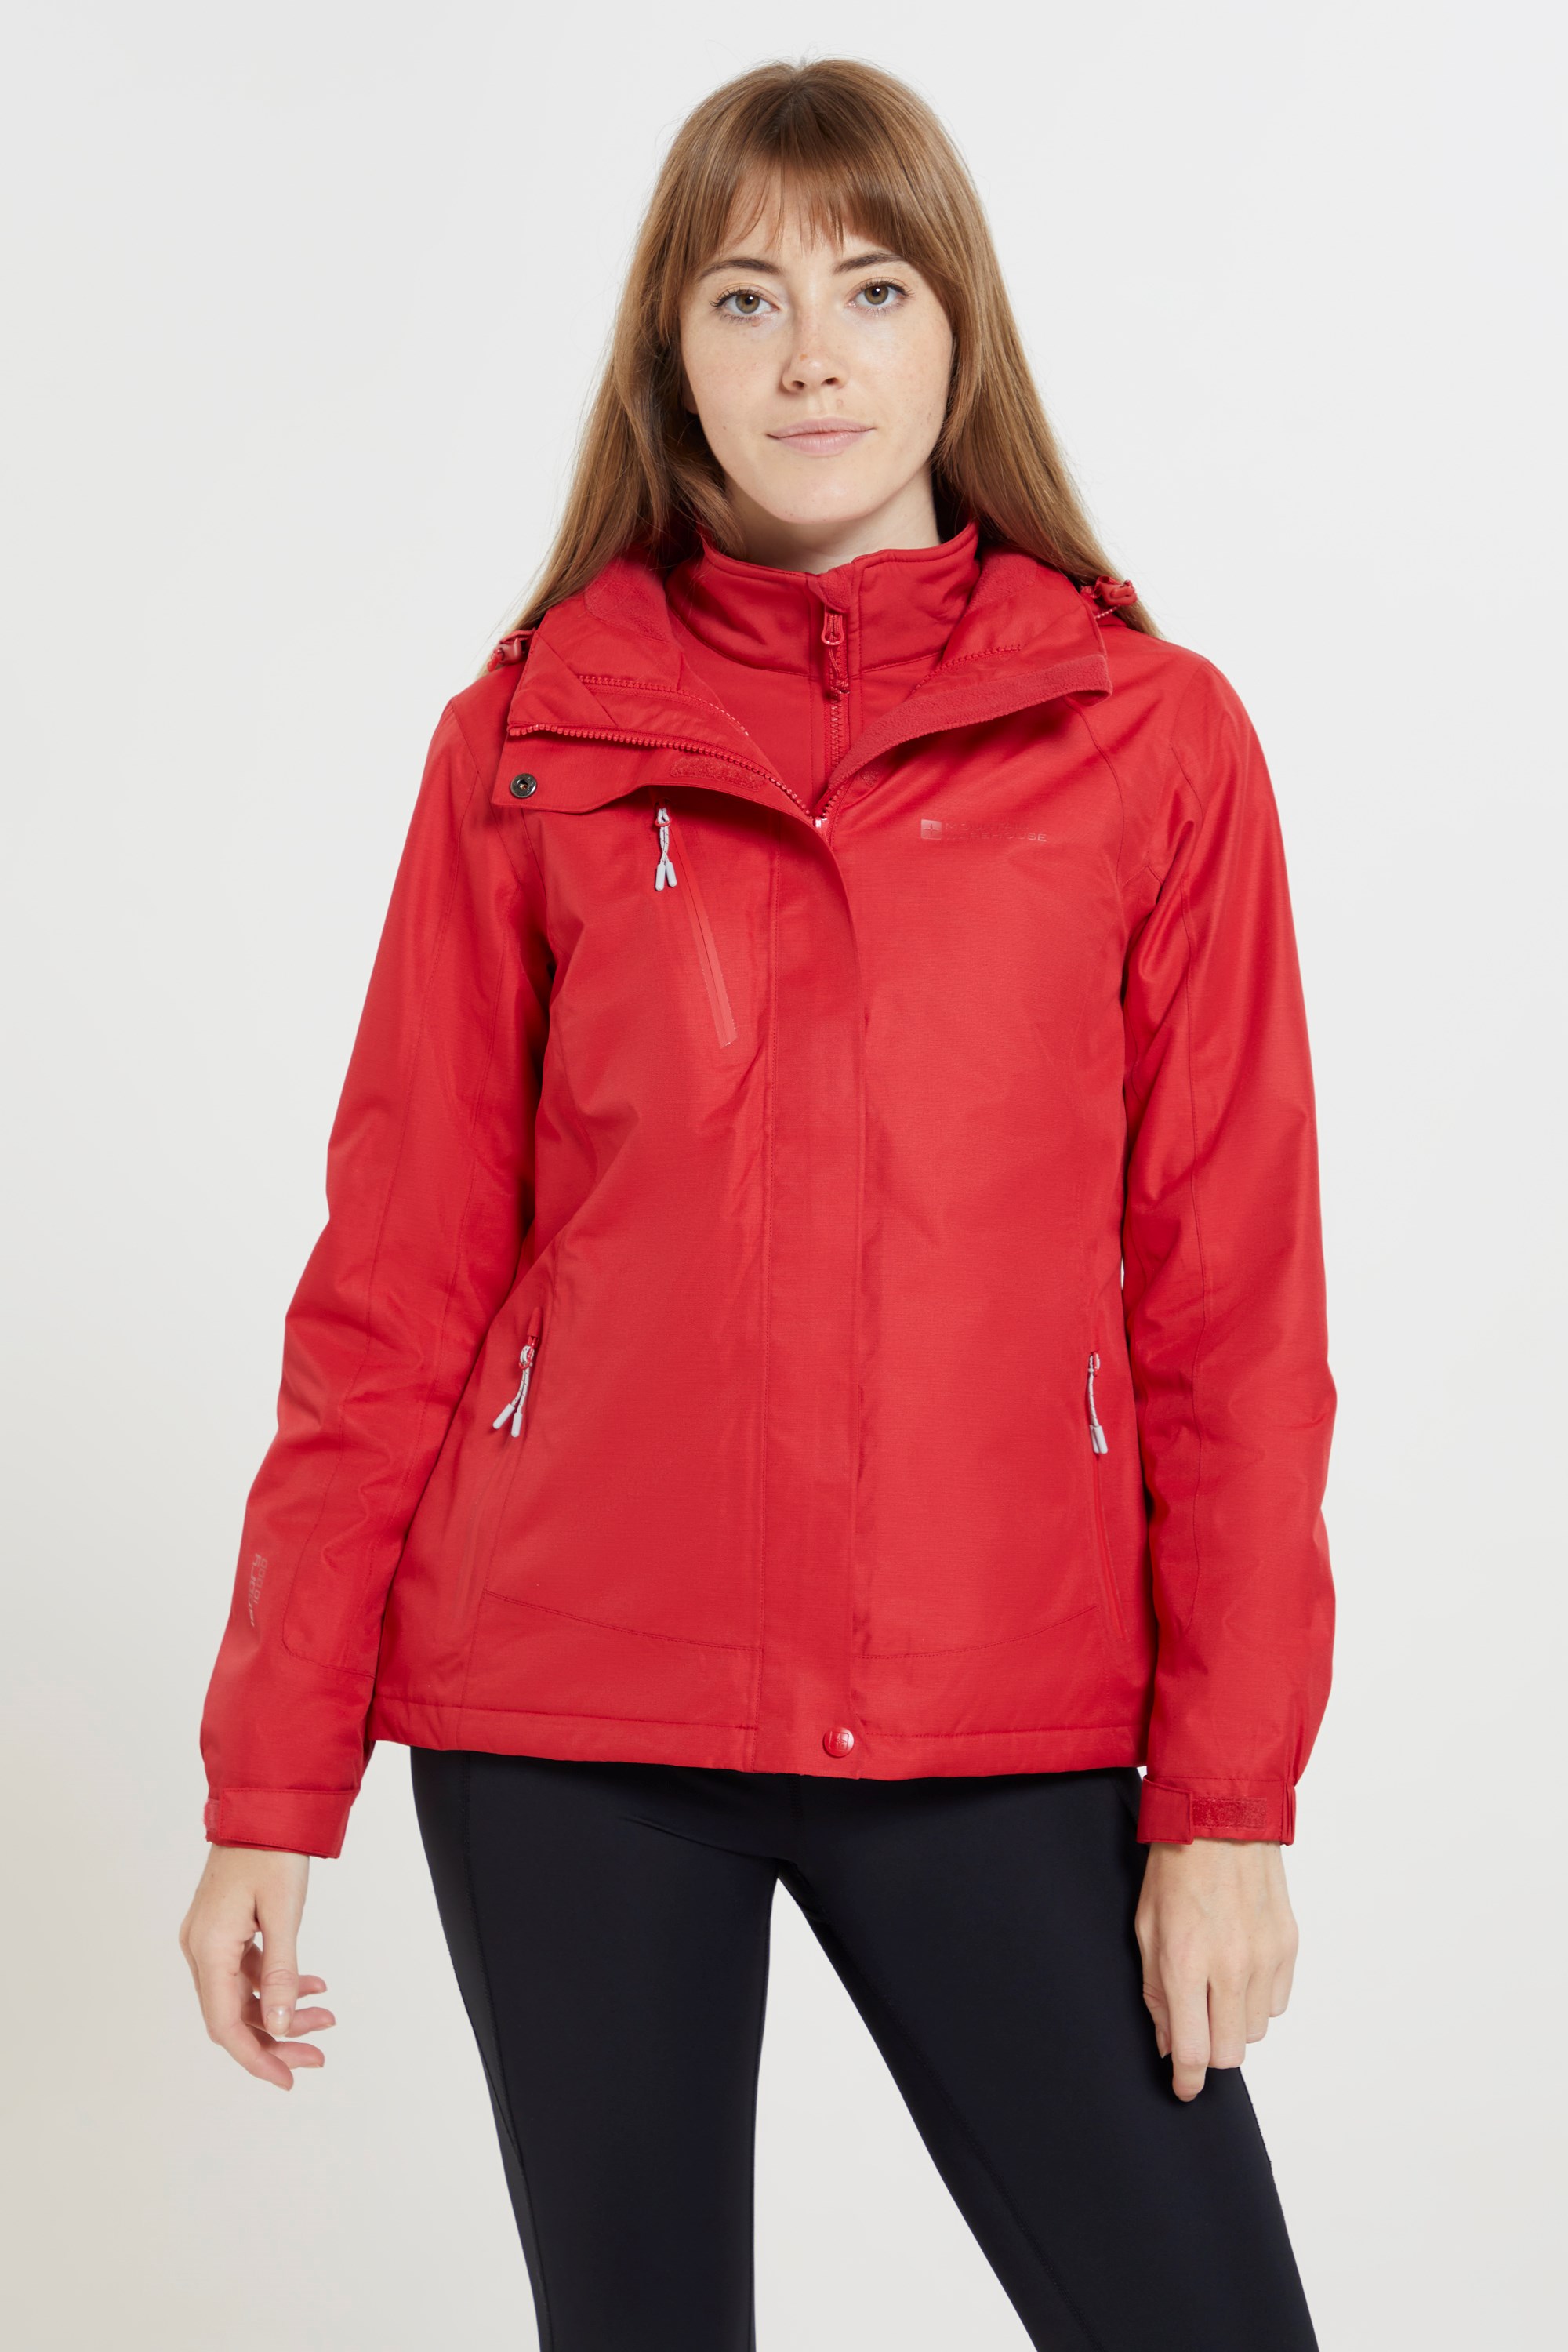 Bracken Melange Womens 3 In 1 Jacket - Red